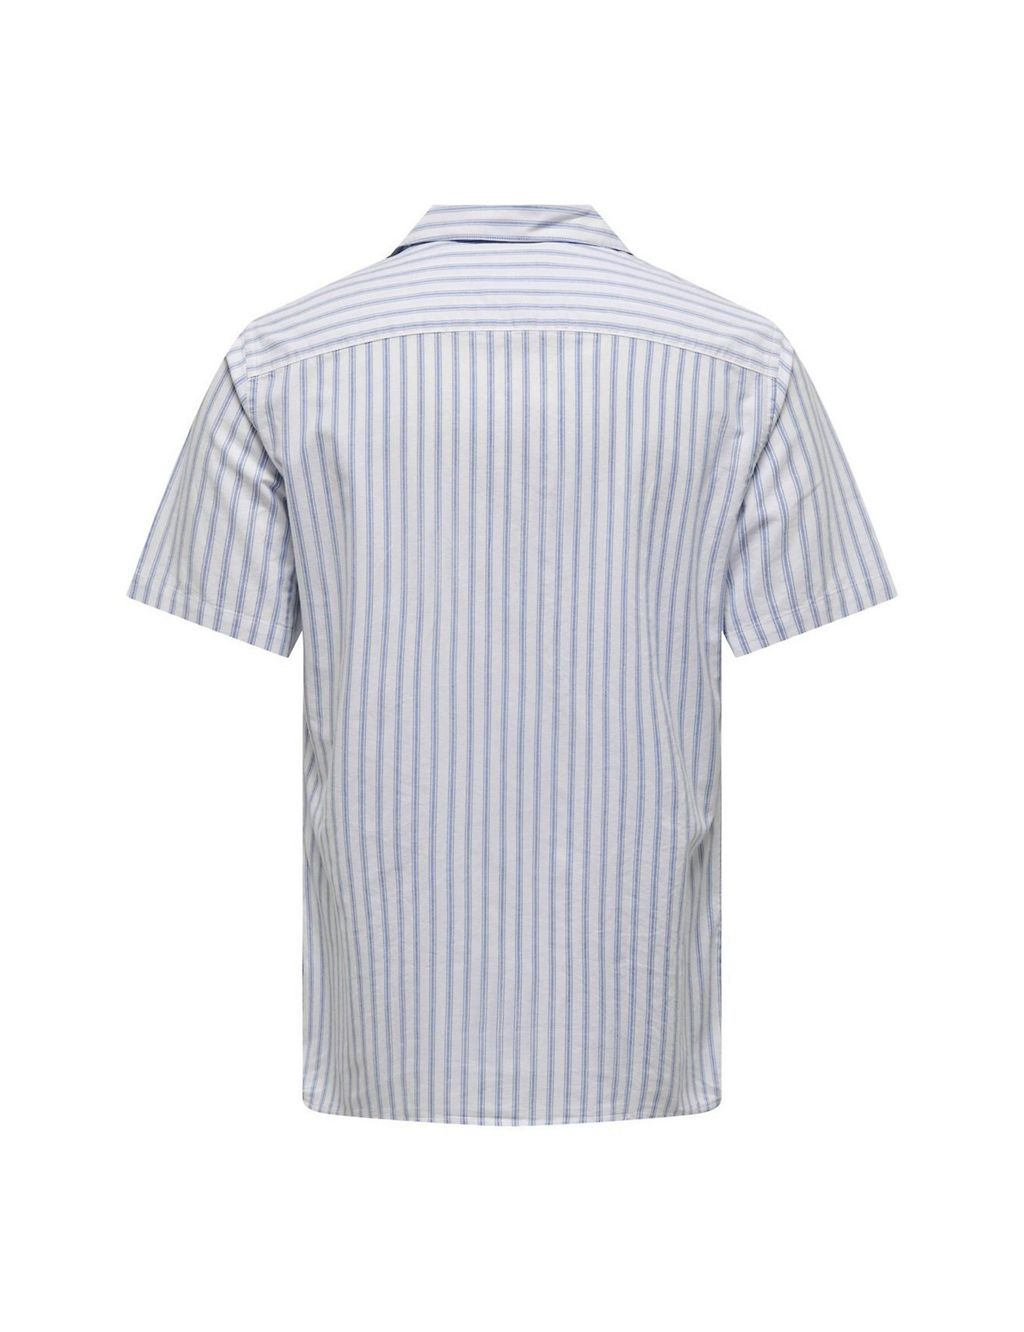 Cotton Rich Striped Oxford Shirt 7 of 7